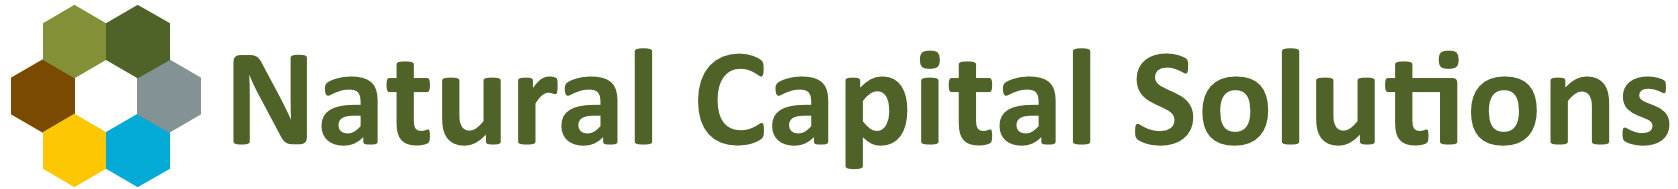 Natural Capital Solutions logo